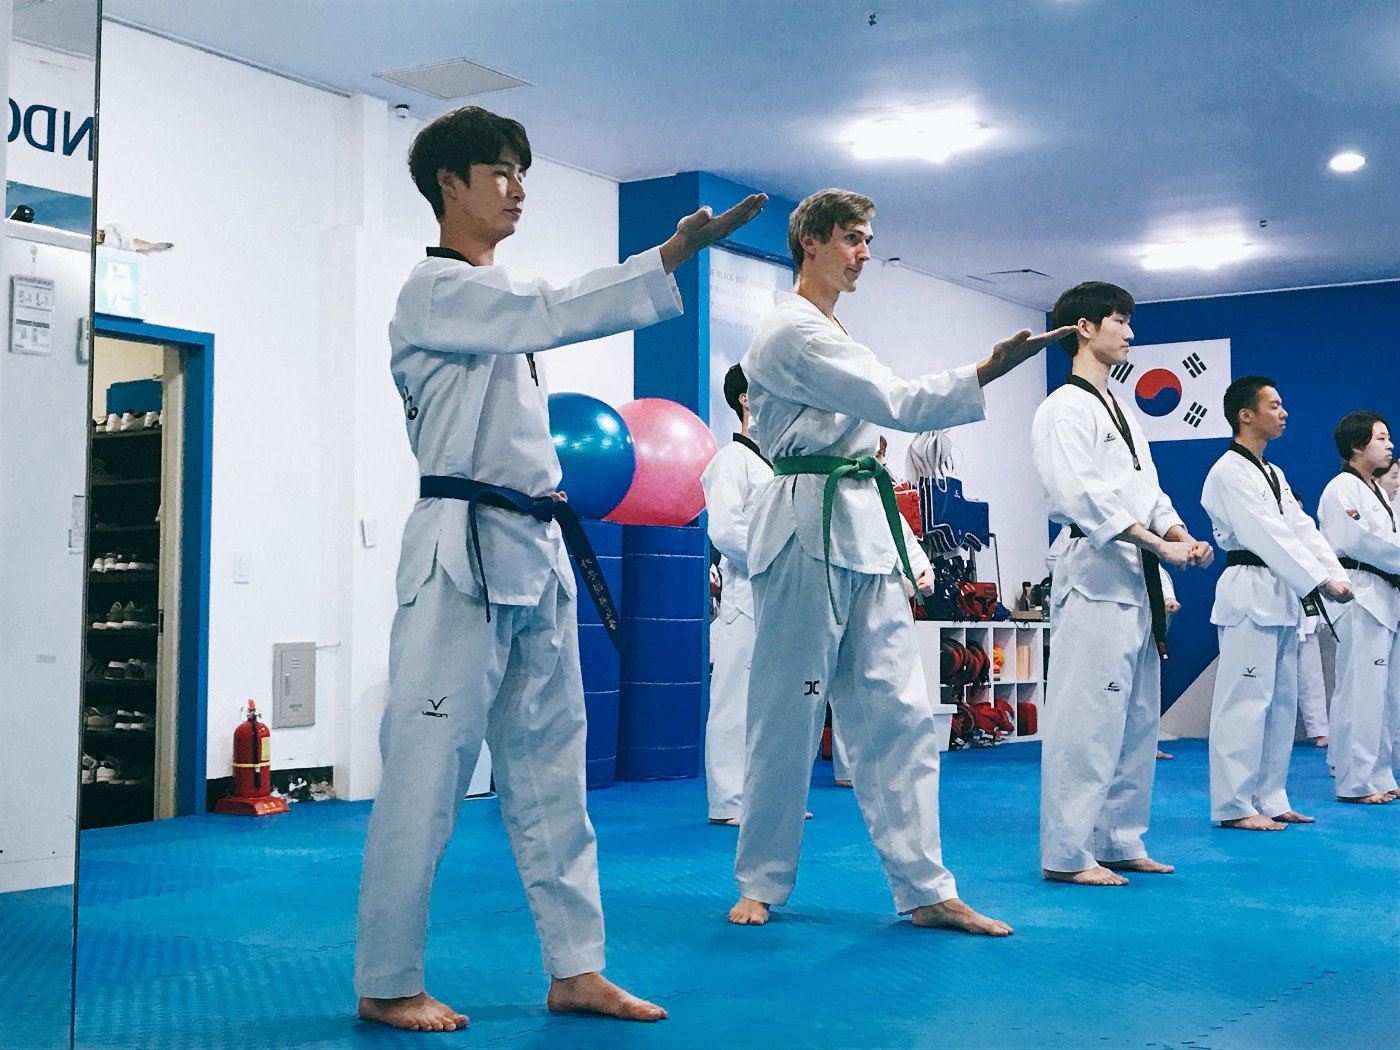 Learning Taegeuk 3 at Gaon Taekwondo